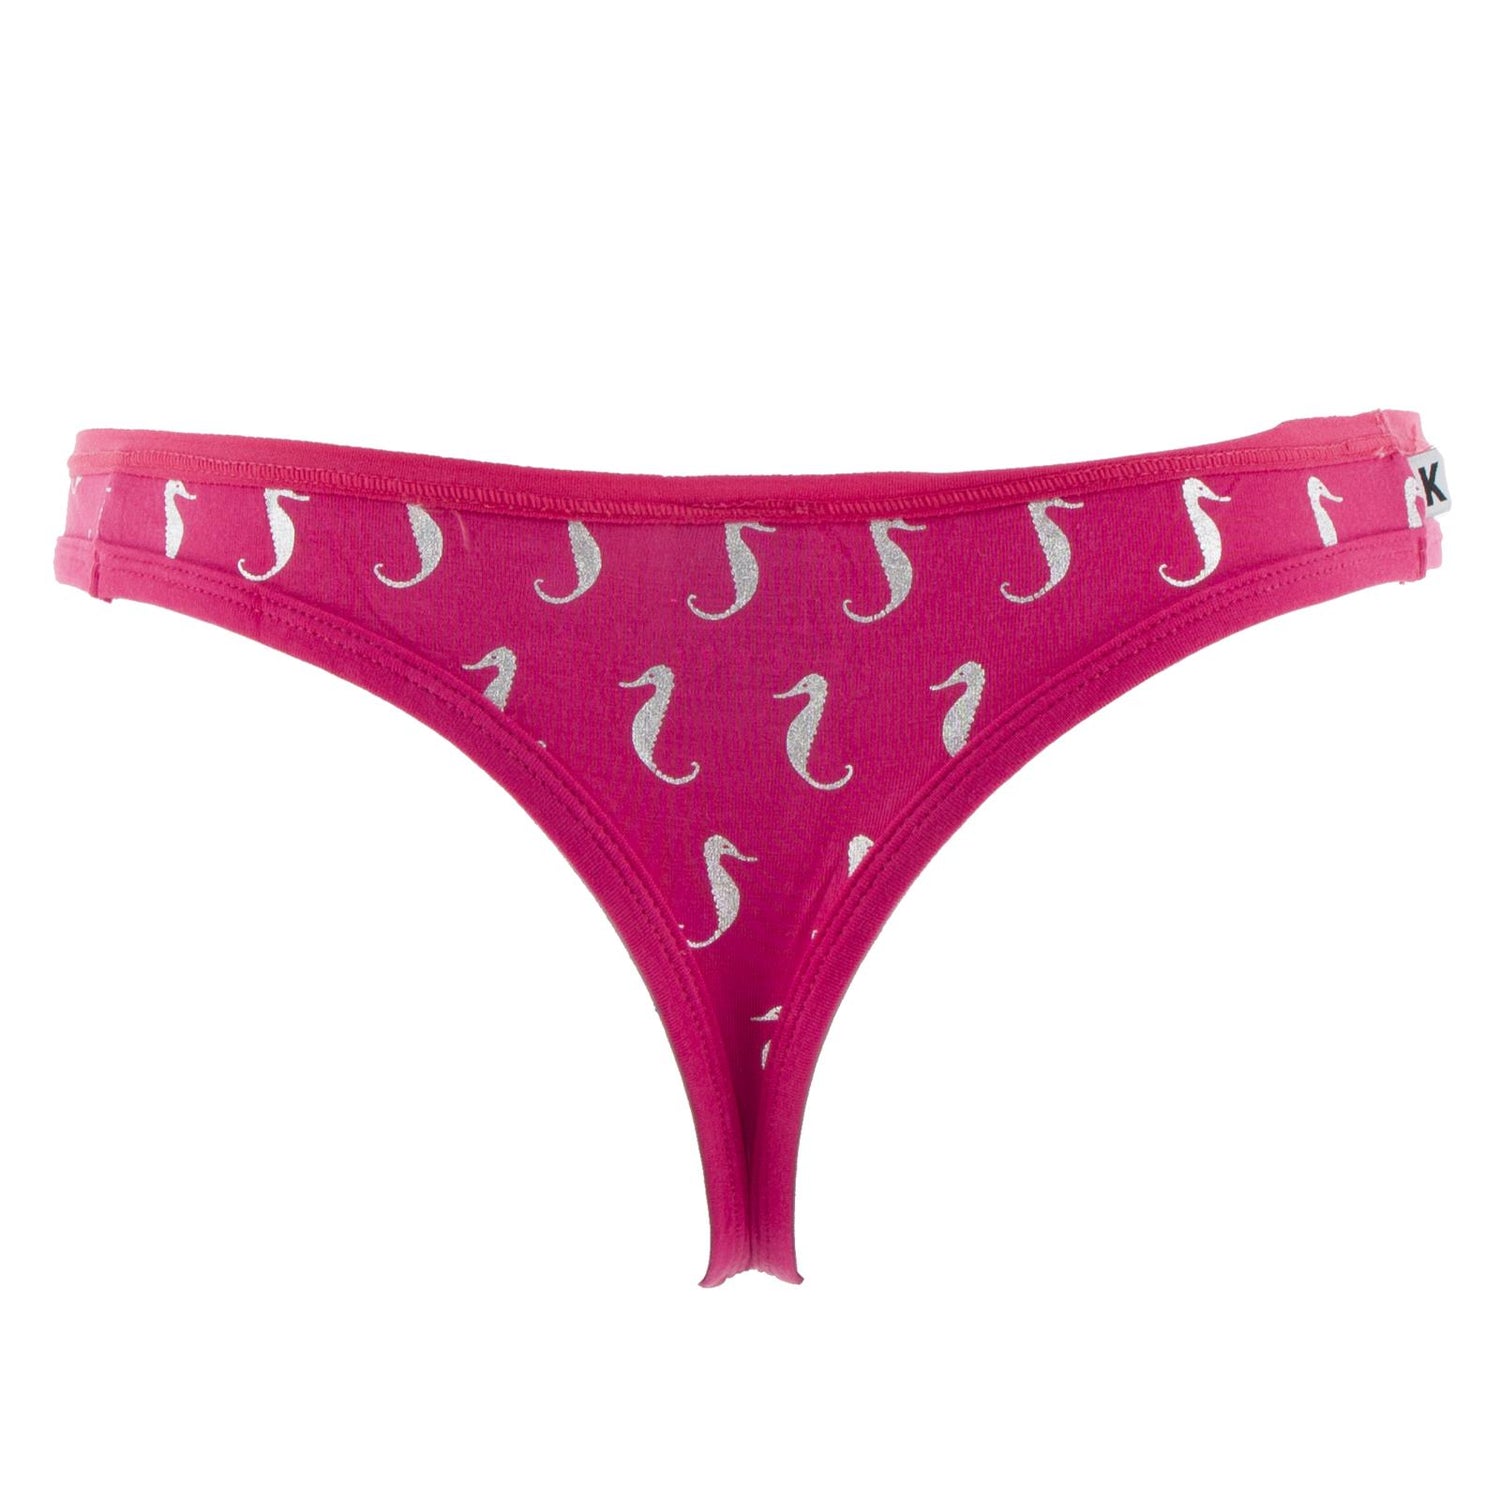 Women's Print Classic Thong Underwear in Prickly Pear Mini Seahorses